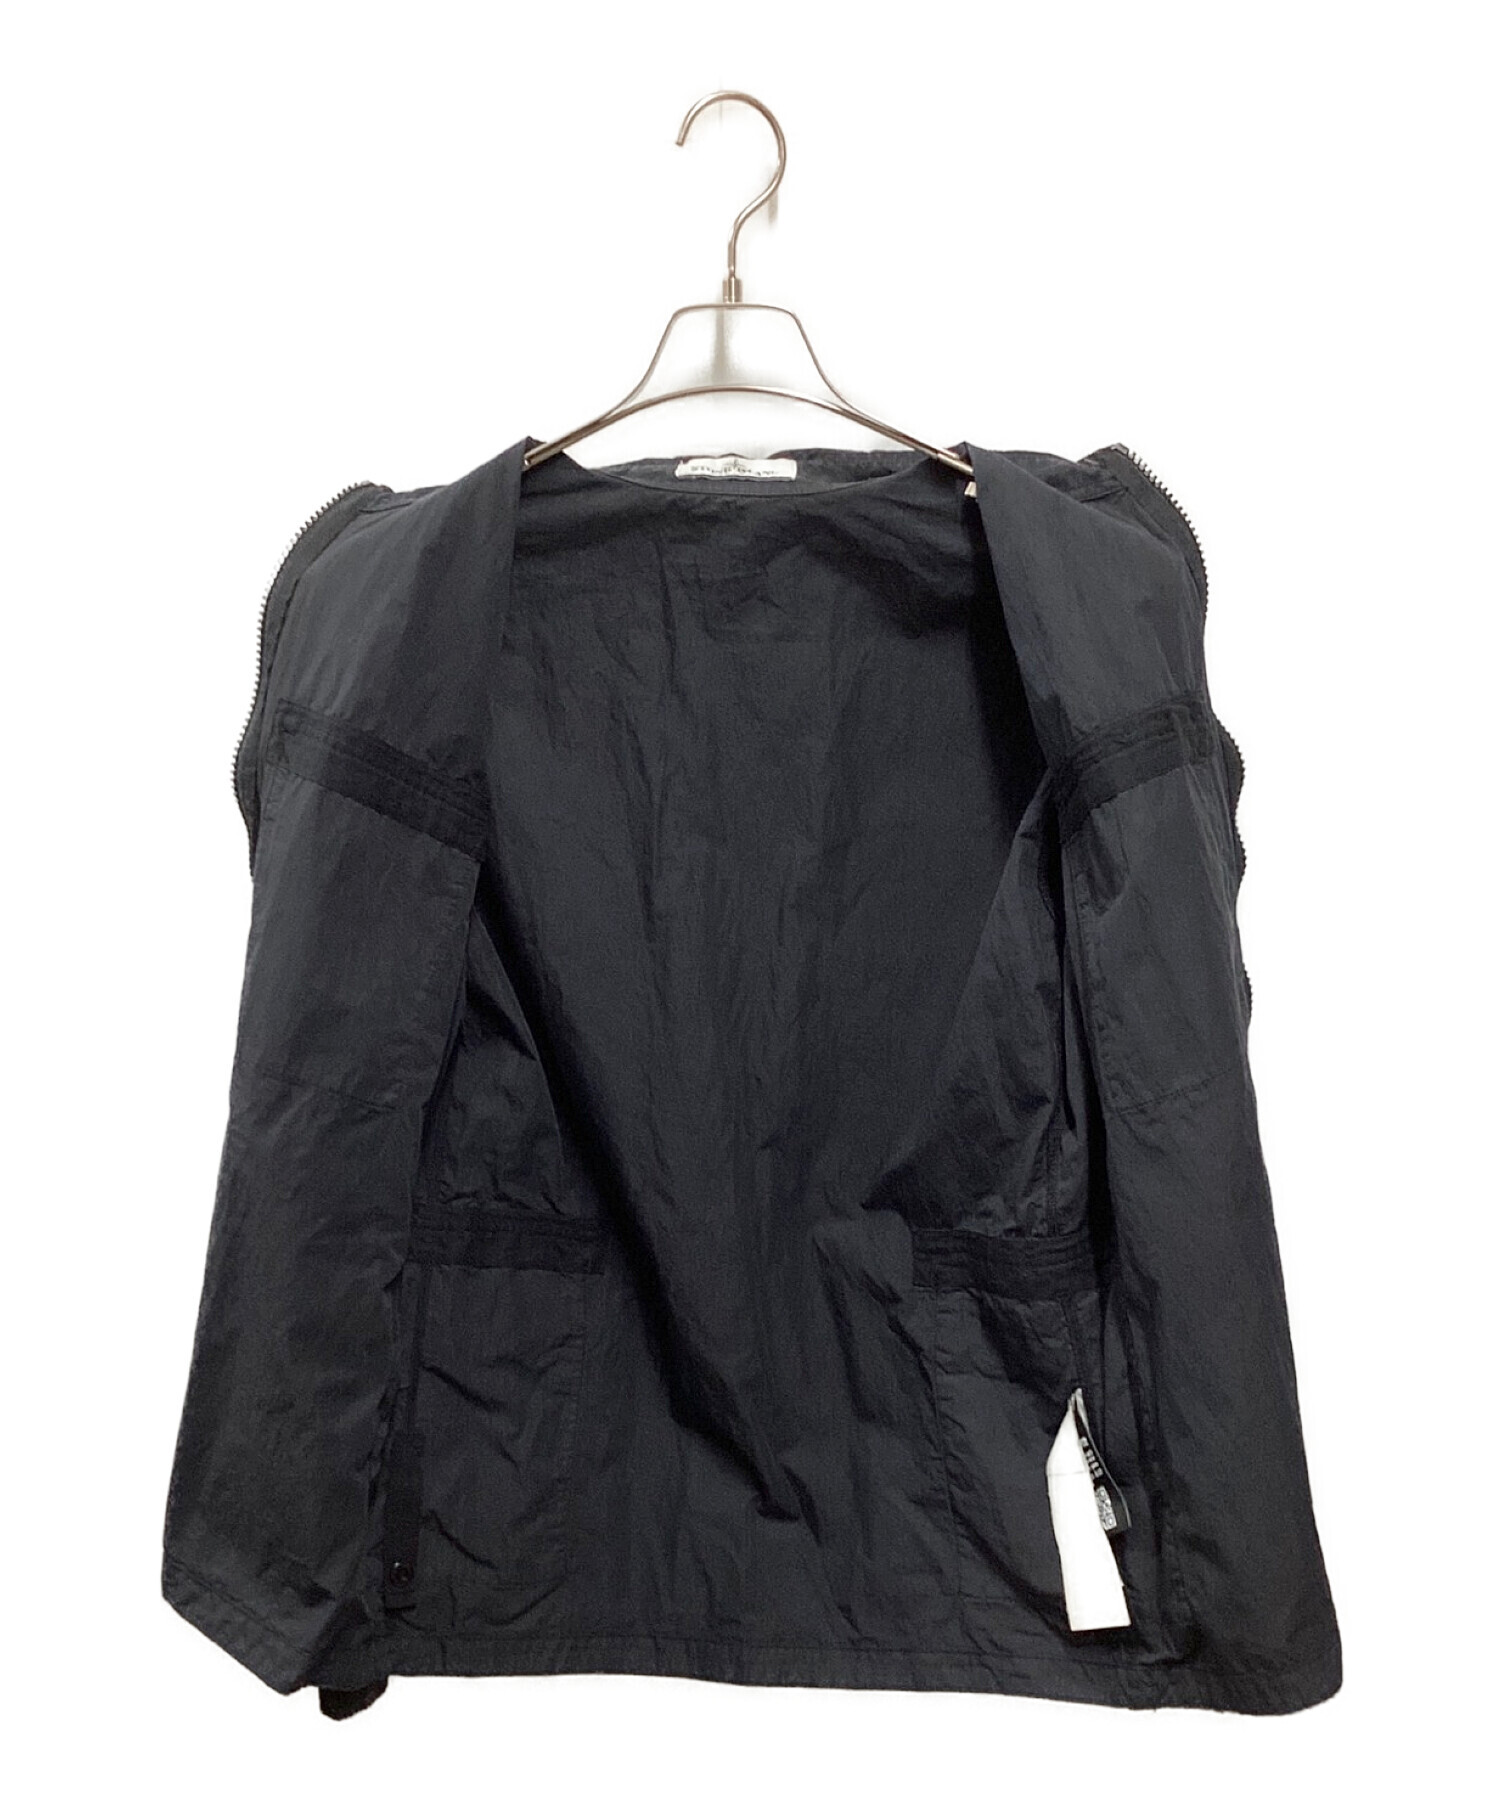 STONE ISLAND (ストーンアイランド) Over Shirt Jacket(オーバーシャツジャケット) ブラック サイズ:S